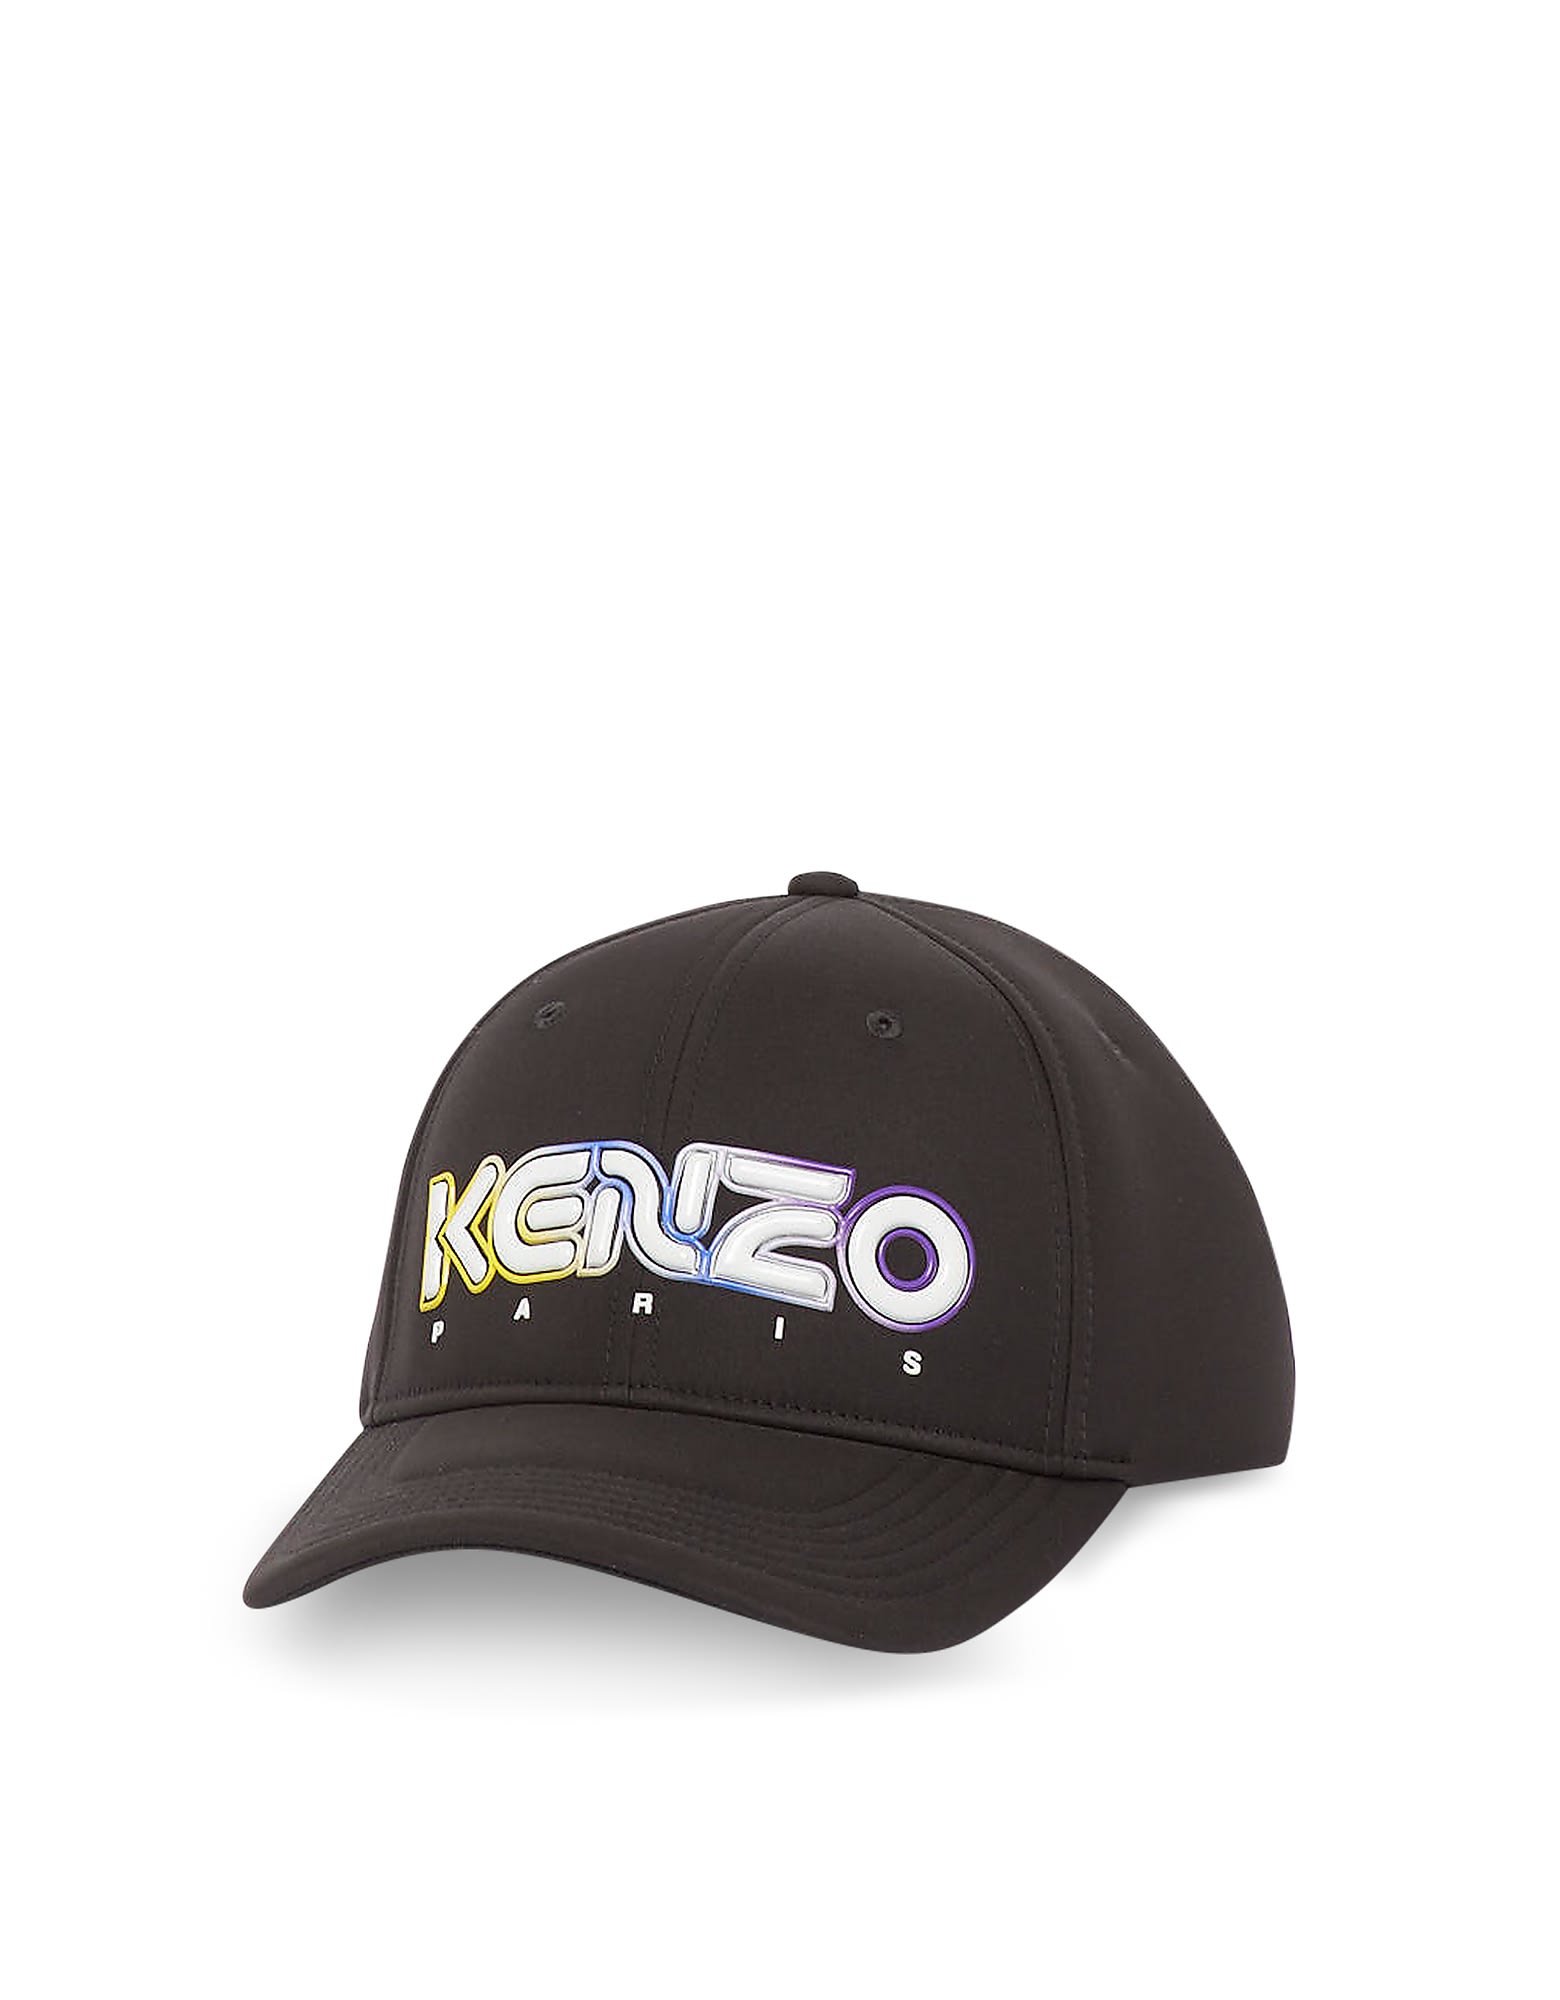 KENZO BLACK COTTON KOMBO NEOPRENE BASEBALL CAP,11234670